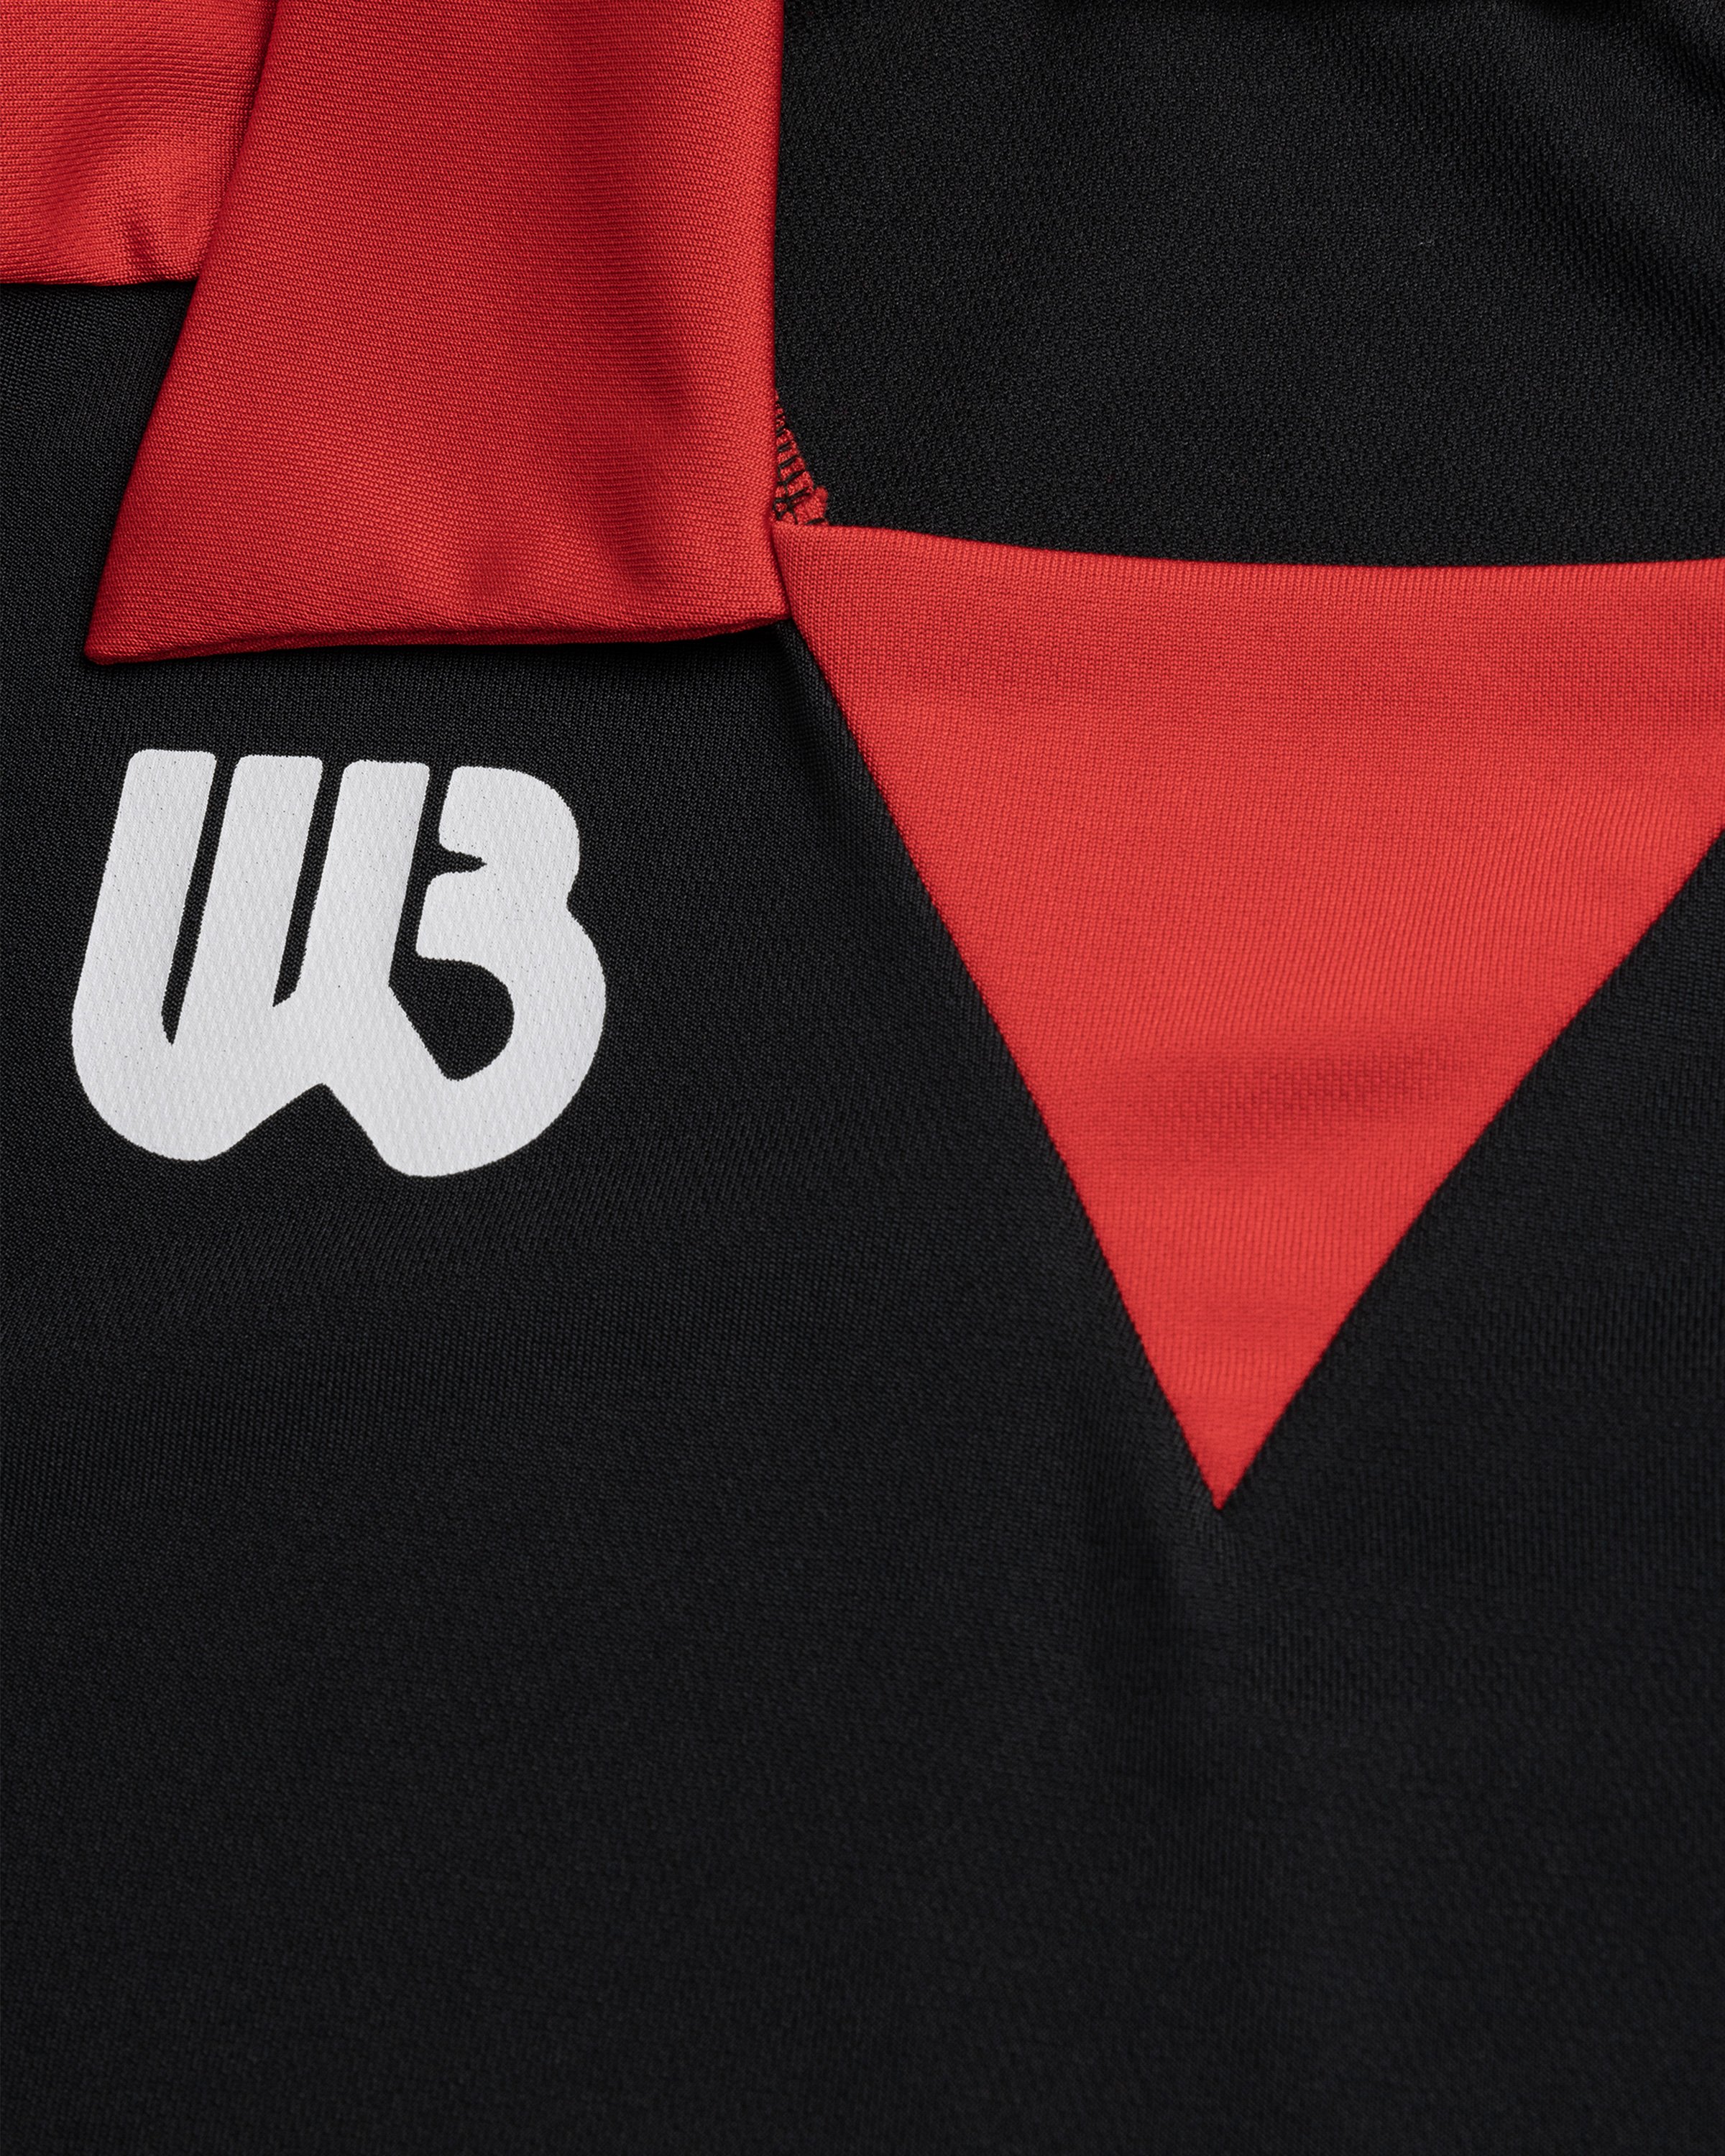 Wales Bonner - Home Jersey Shirt Black/Red - Clothing - Black - Image 6